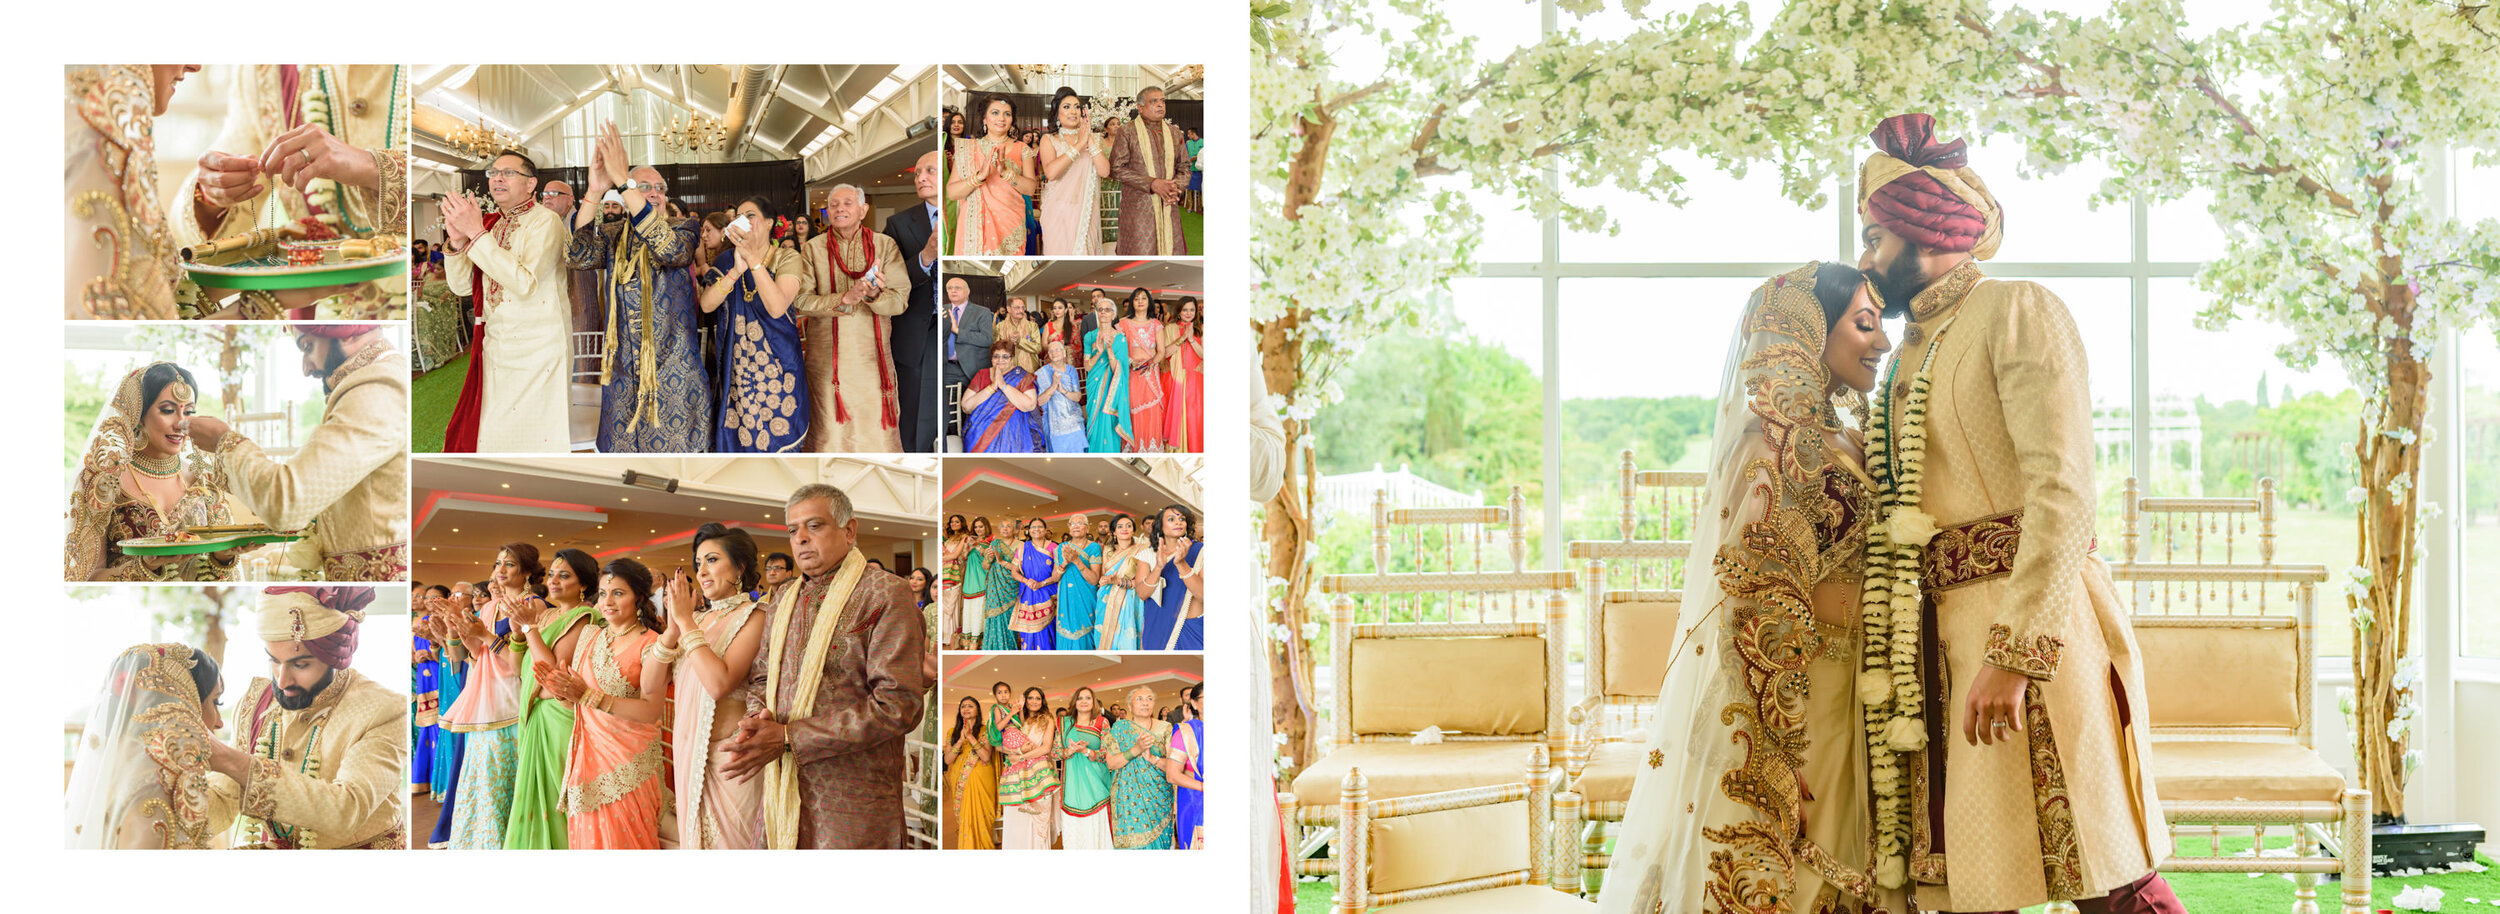 satnam photography luxury hindu wedding album -32.jpg